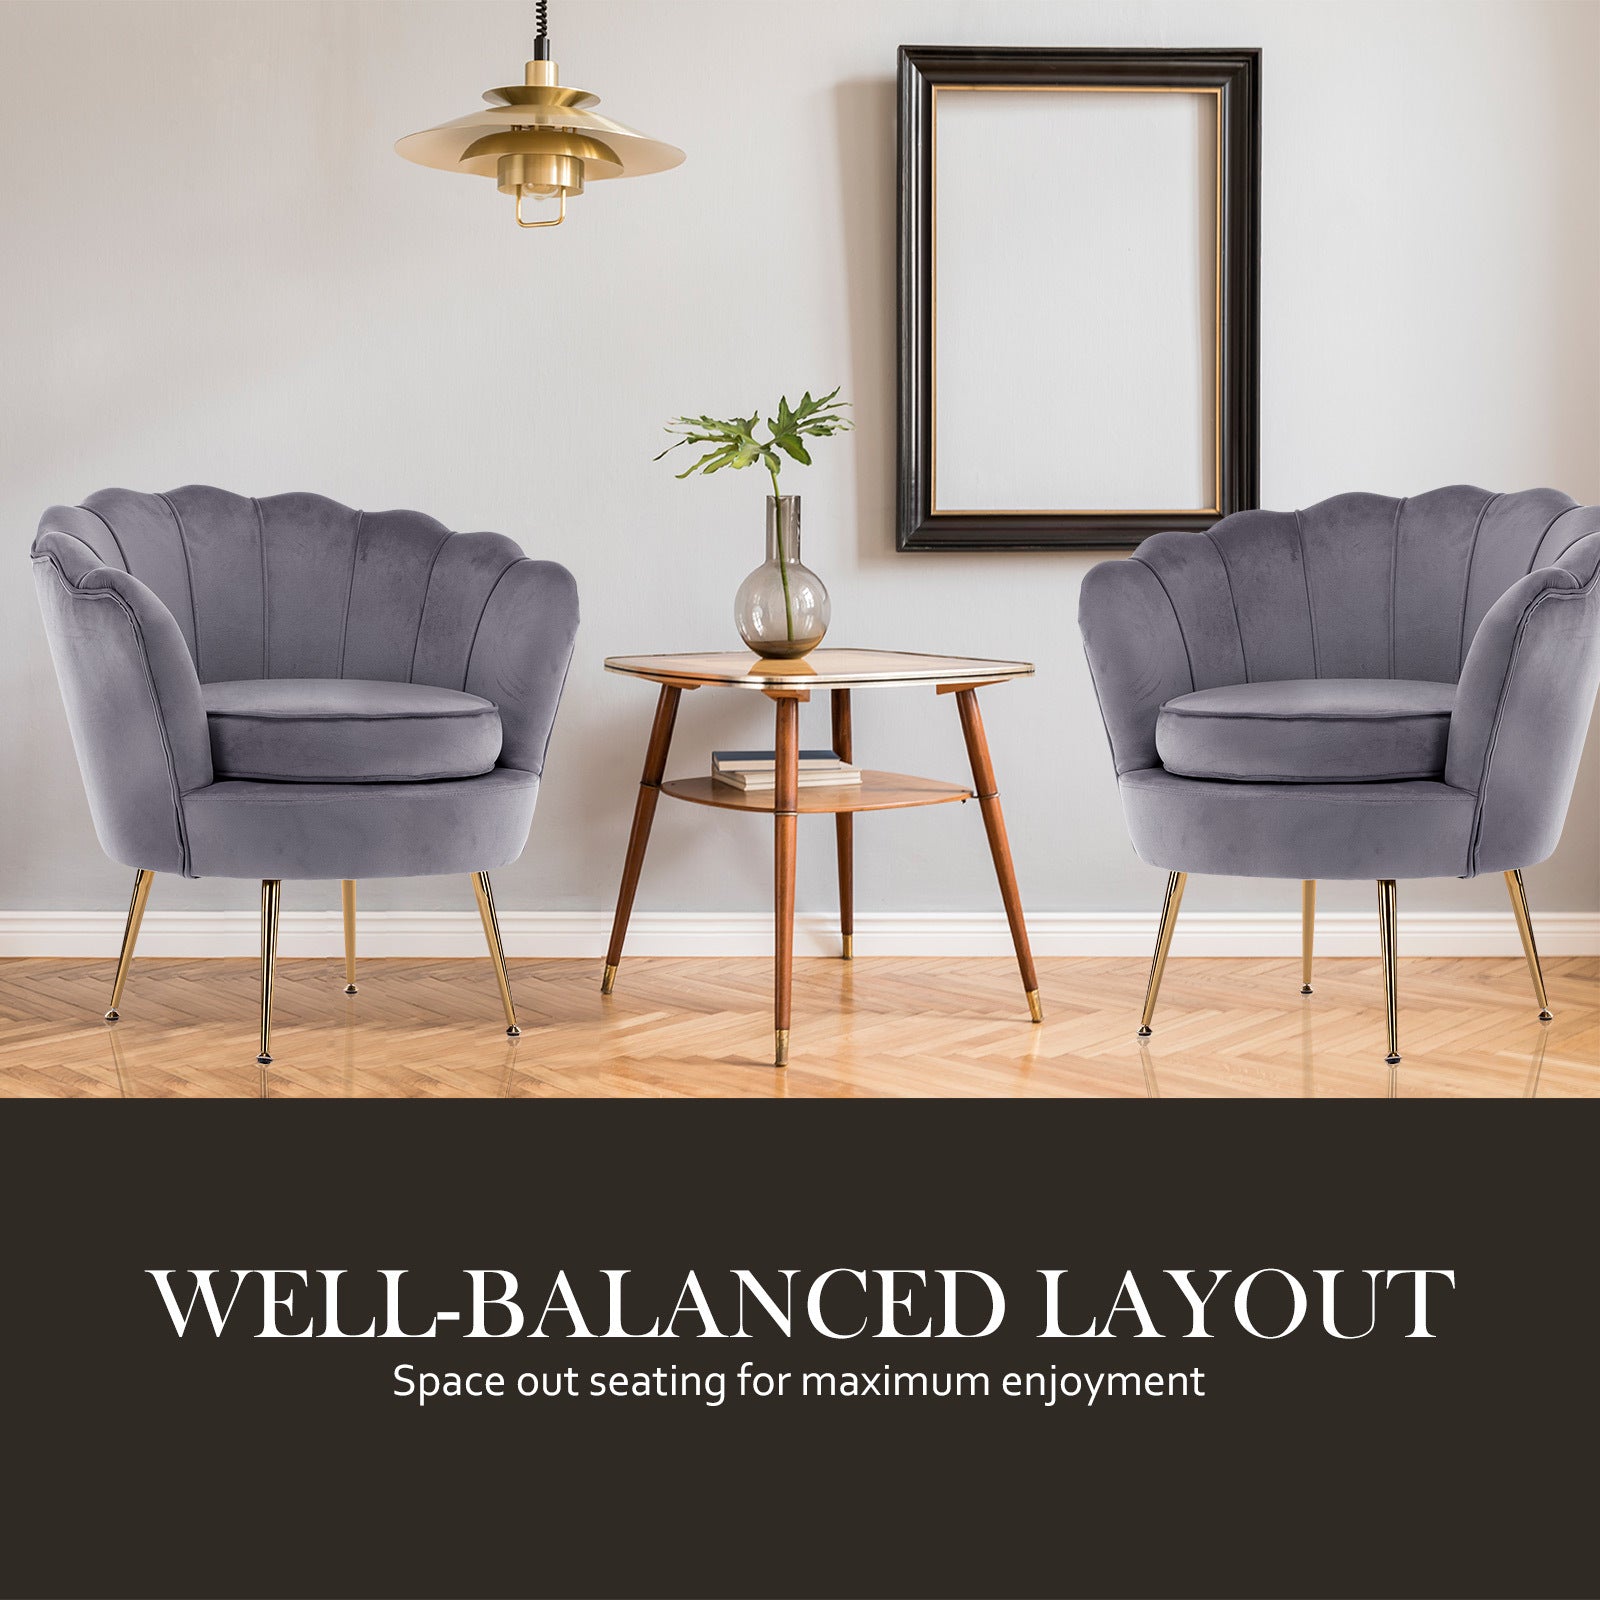 La Bella Shell Scallop Grey Armchair Accent Chair Velvet + Round Ottoman Footstool